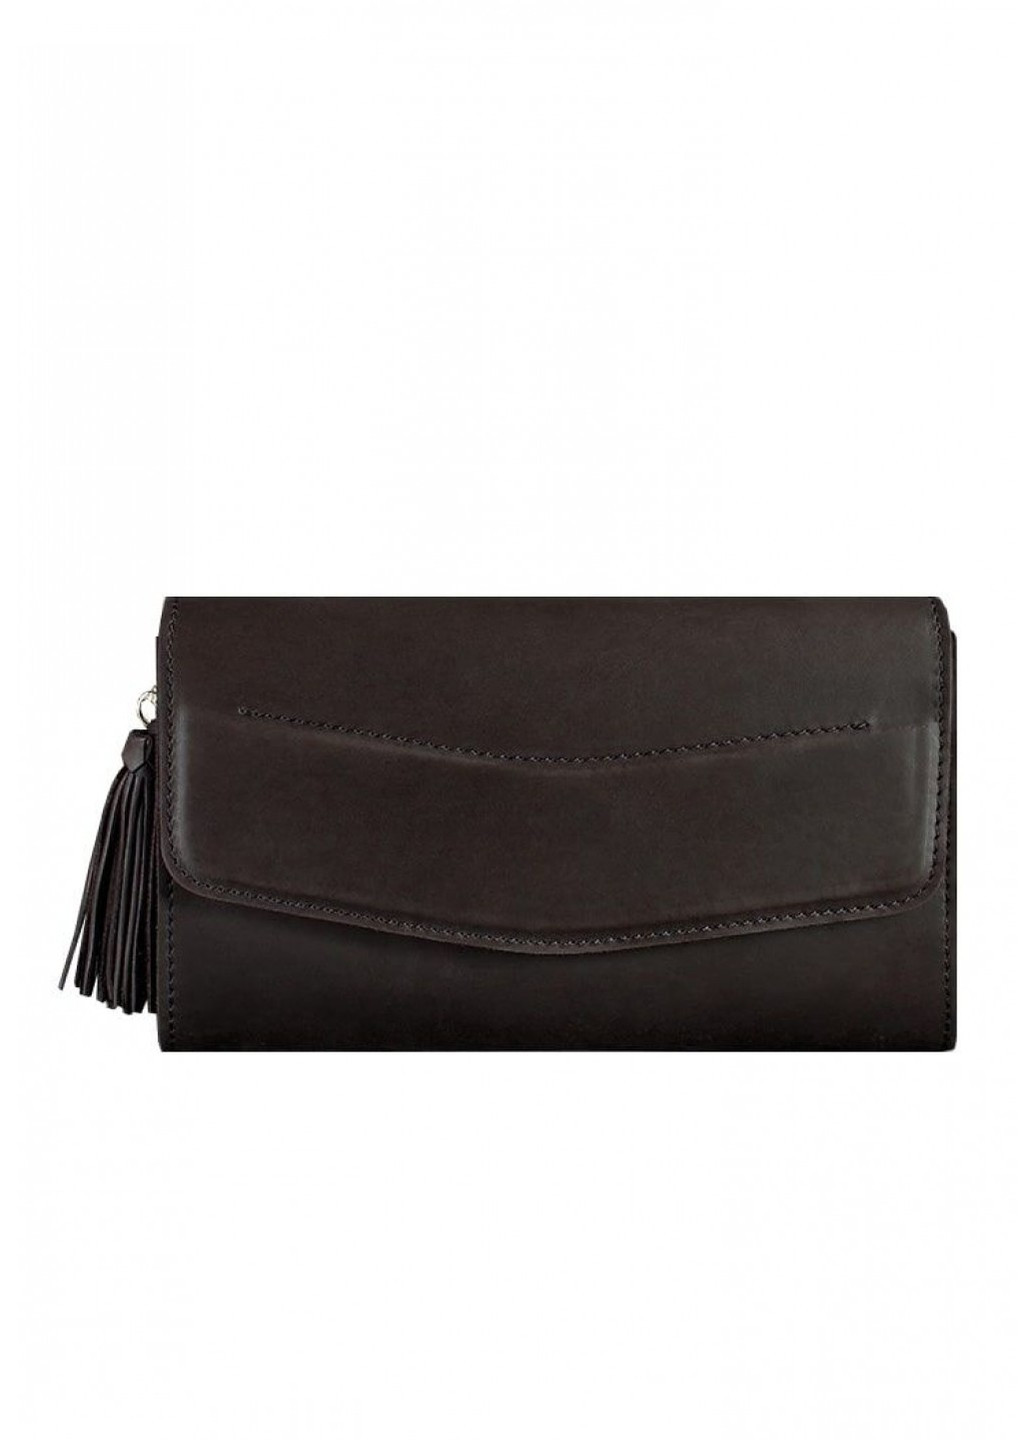 Женская кожаная сумка Элис темно-коричневая Краст BN-BAG-7-CHOKO BlankNote (266142934)